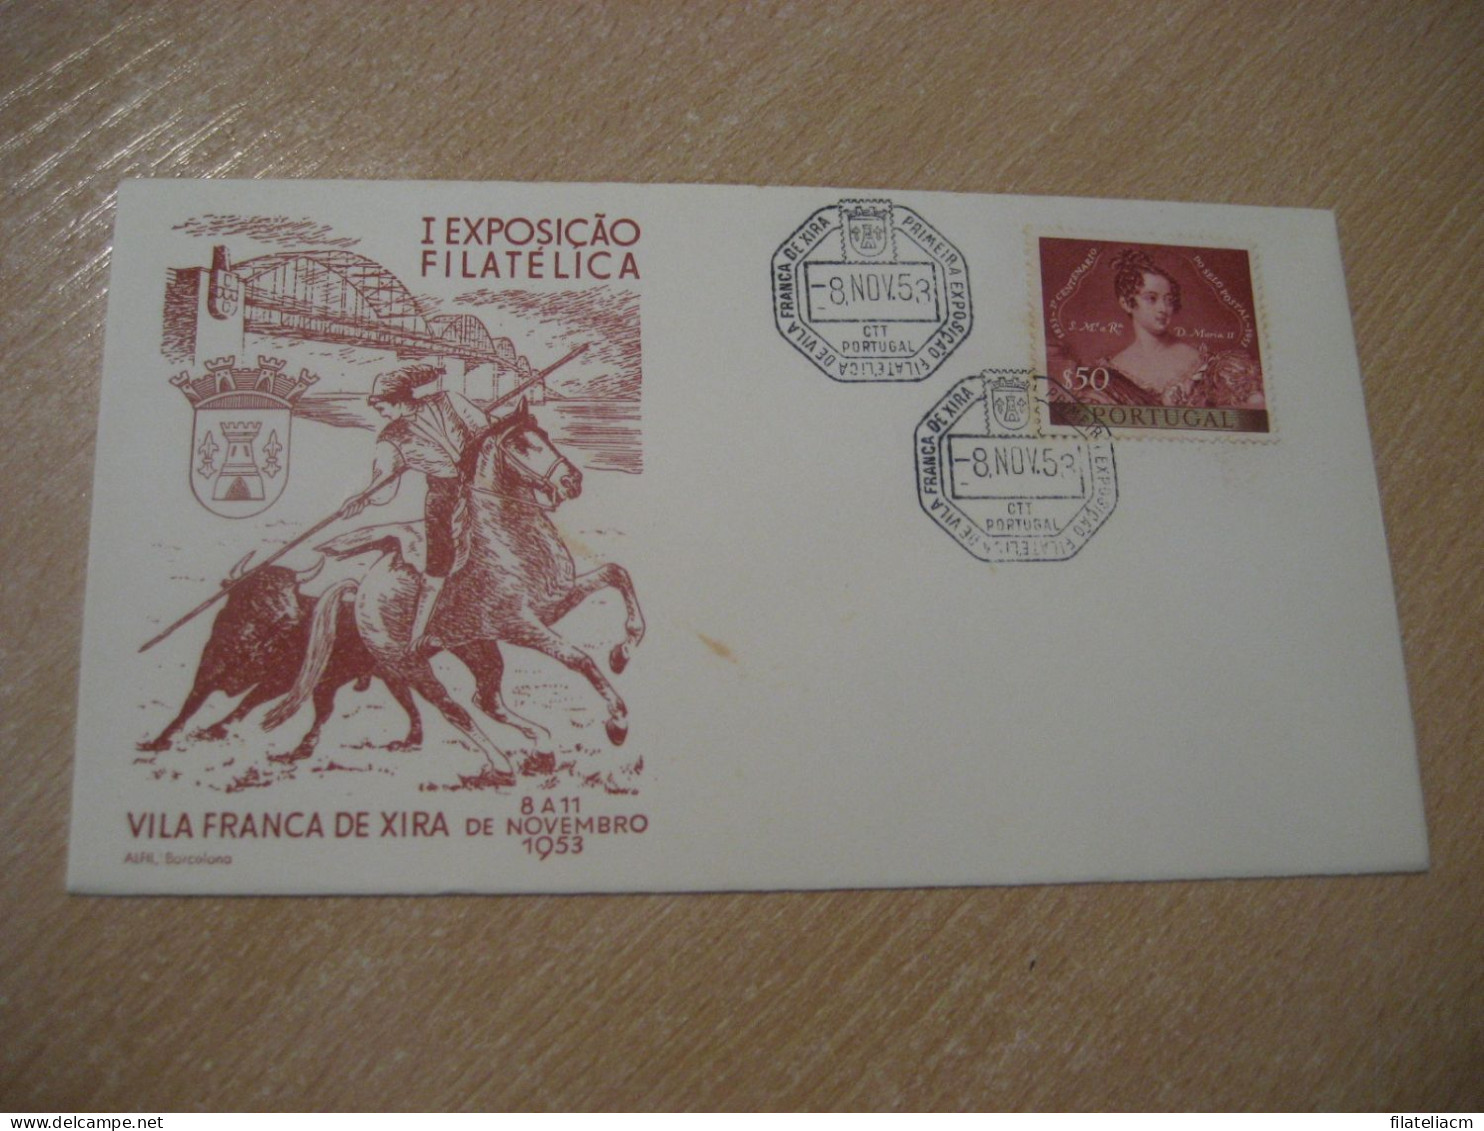 VILA FRANCA DE XIRA 1953 Expo Filatelica Toro Rejoneador Cow Bull Horse Matador Cancel Cover PORTUGAL - Brieven En Documenten